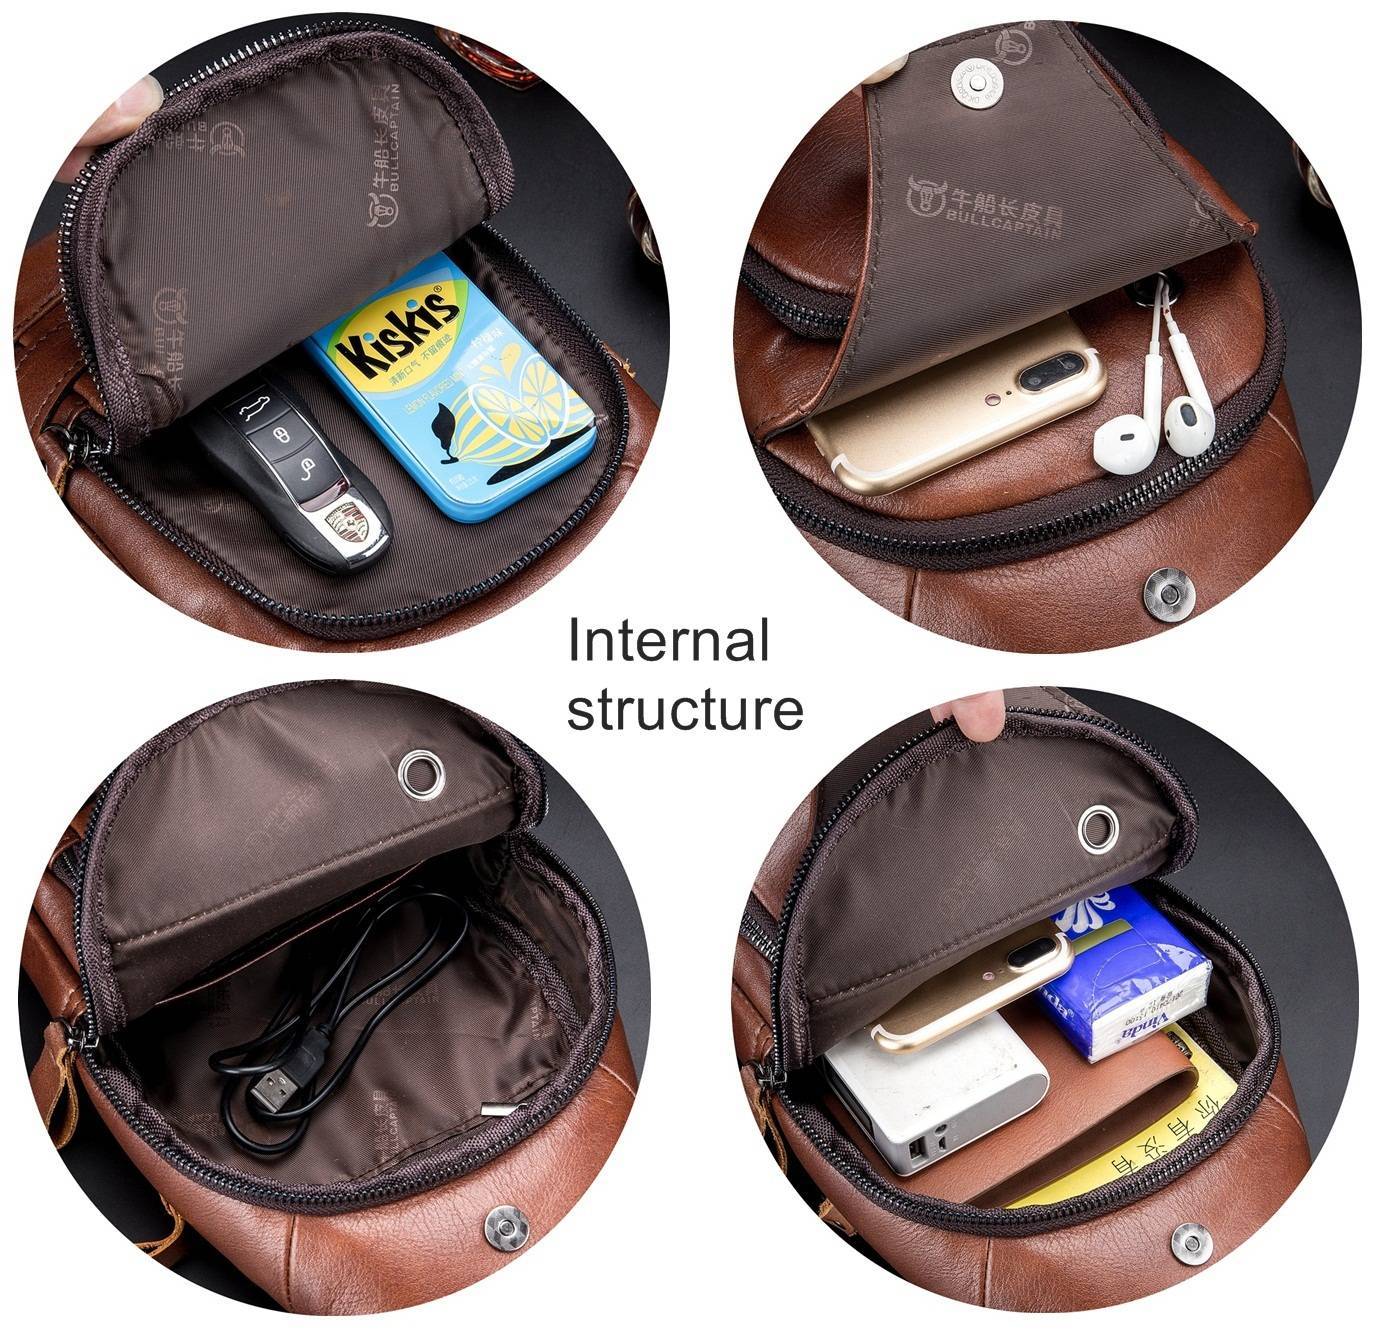  BULLCAPTAIN Genuine Leather Men Bags Shoulder Sling Crossbody  Bag Casual Mens Chest Bag Travel Hiking Backpack (Black) : Sports & Outdoors